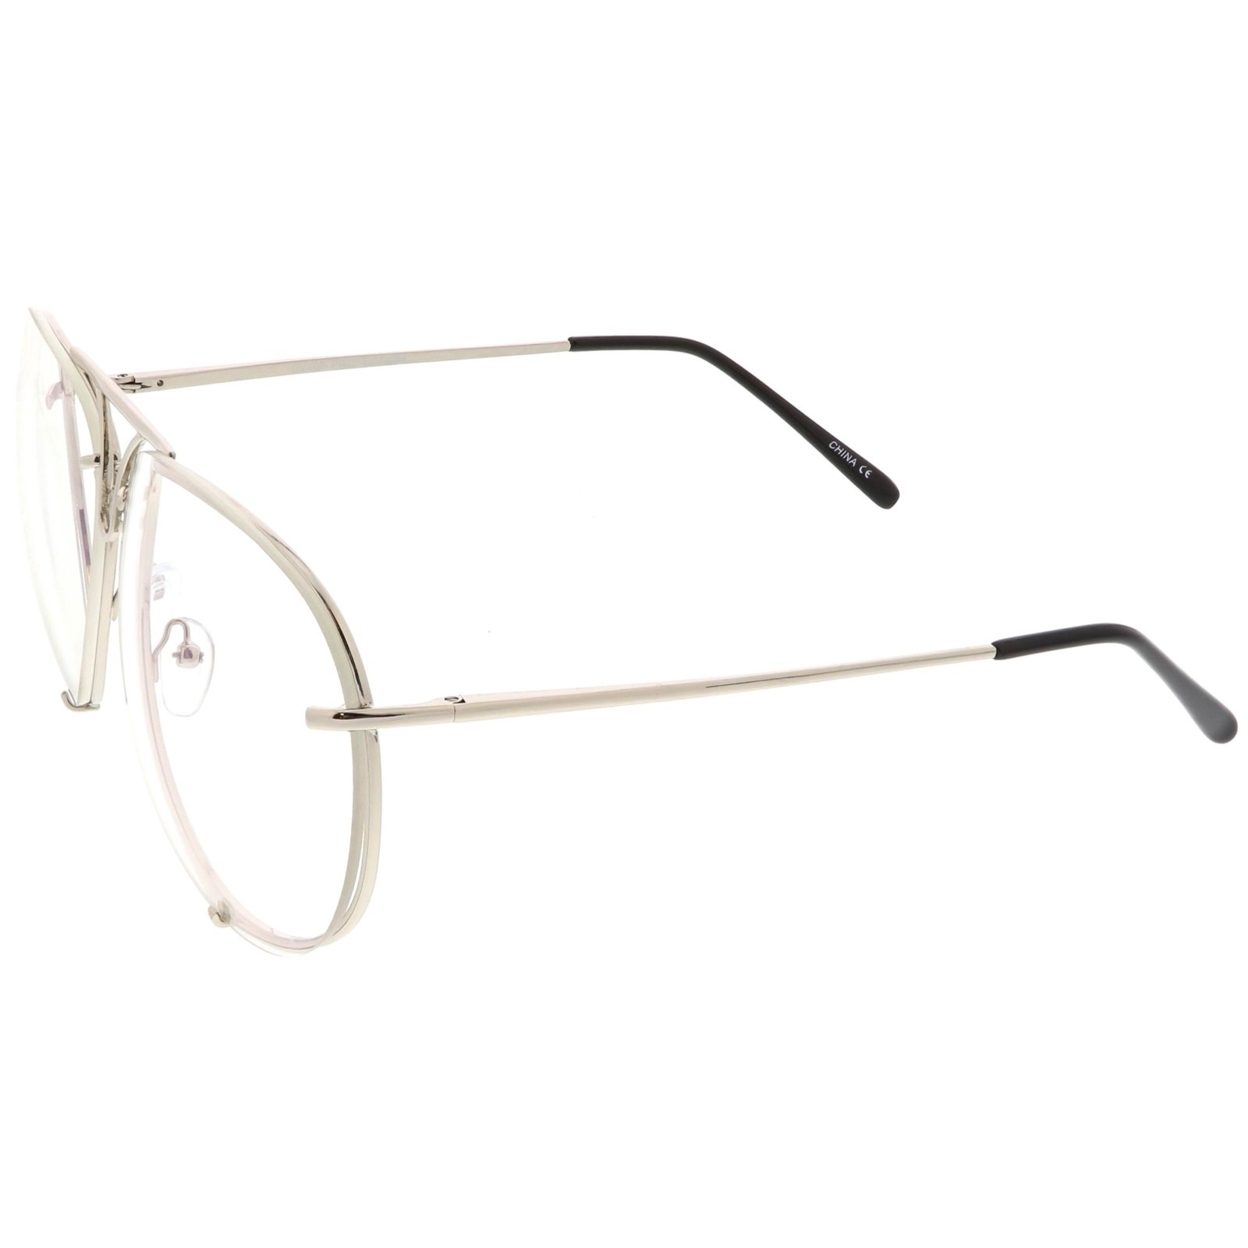 Oversize Rimless Aviator Glasses Unique Nose Piece Clear Lens 67mm - Black / Clear